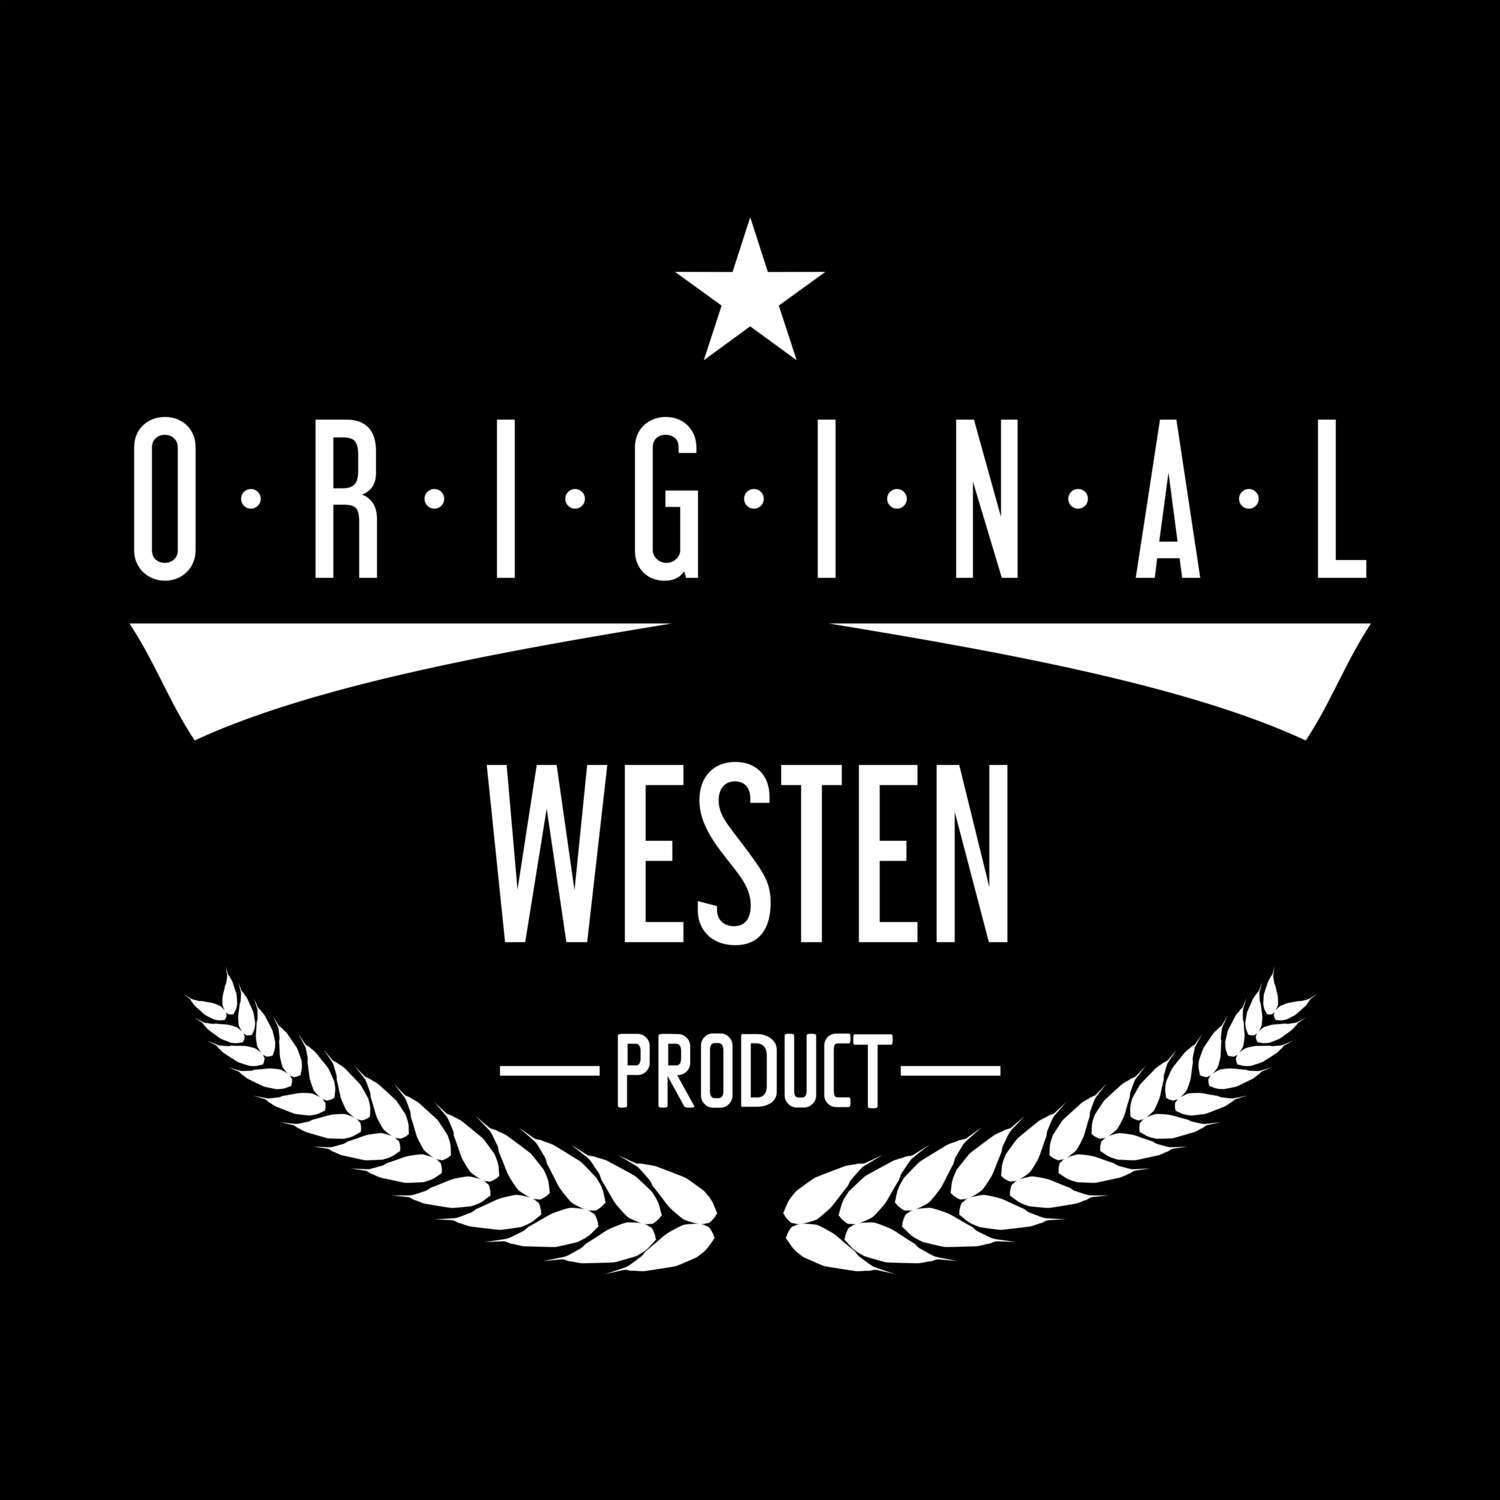 Westen T-Shirt »Original Product«